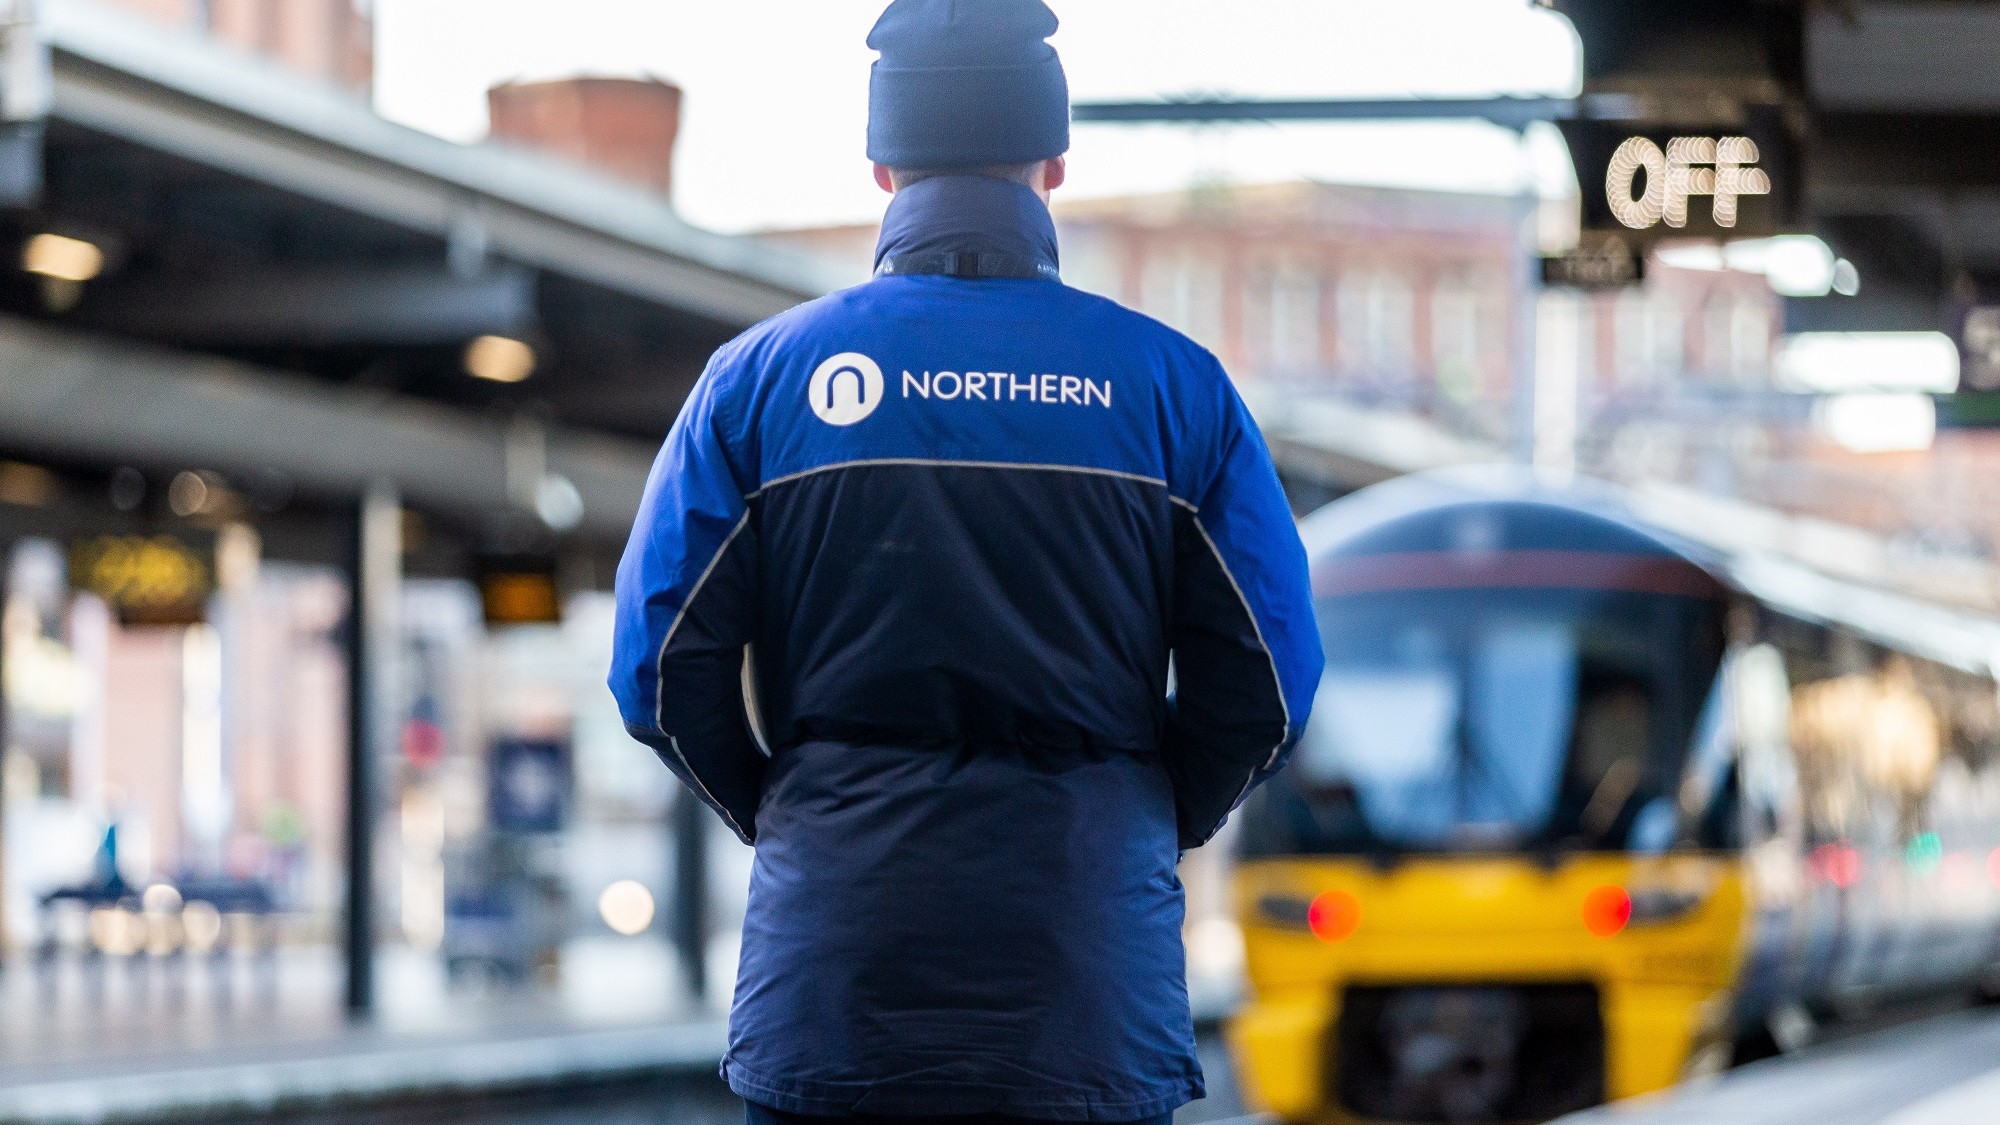 Image shows Northern employee on platform